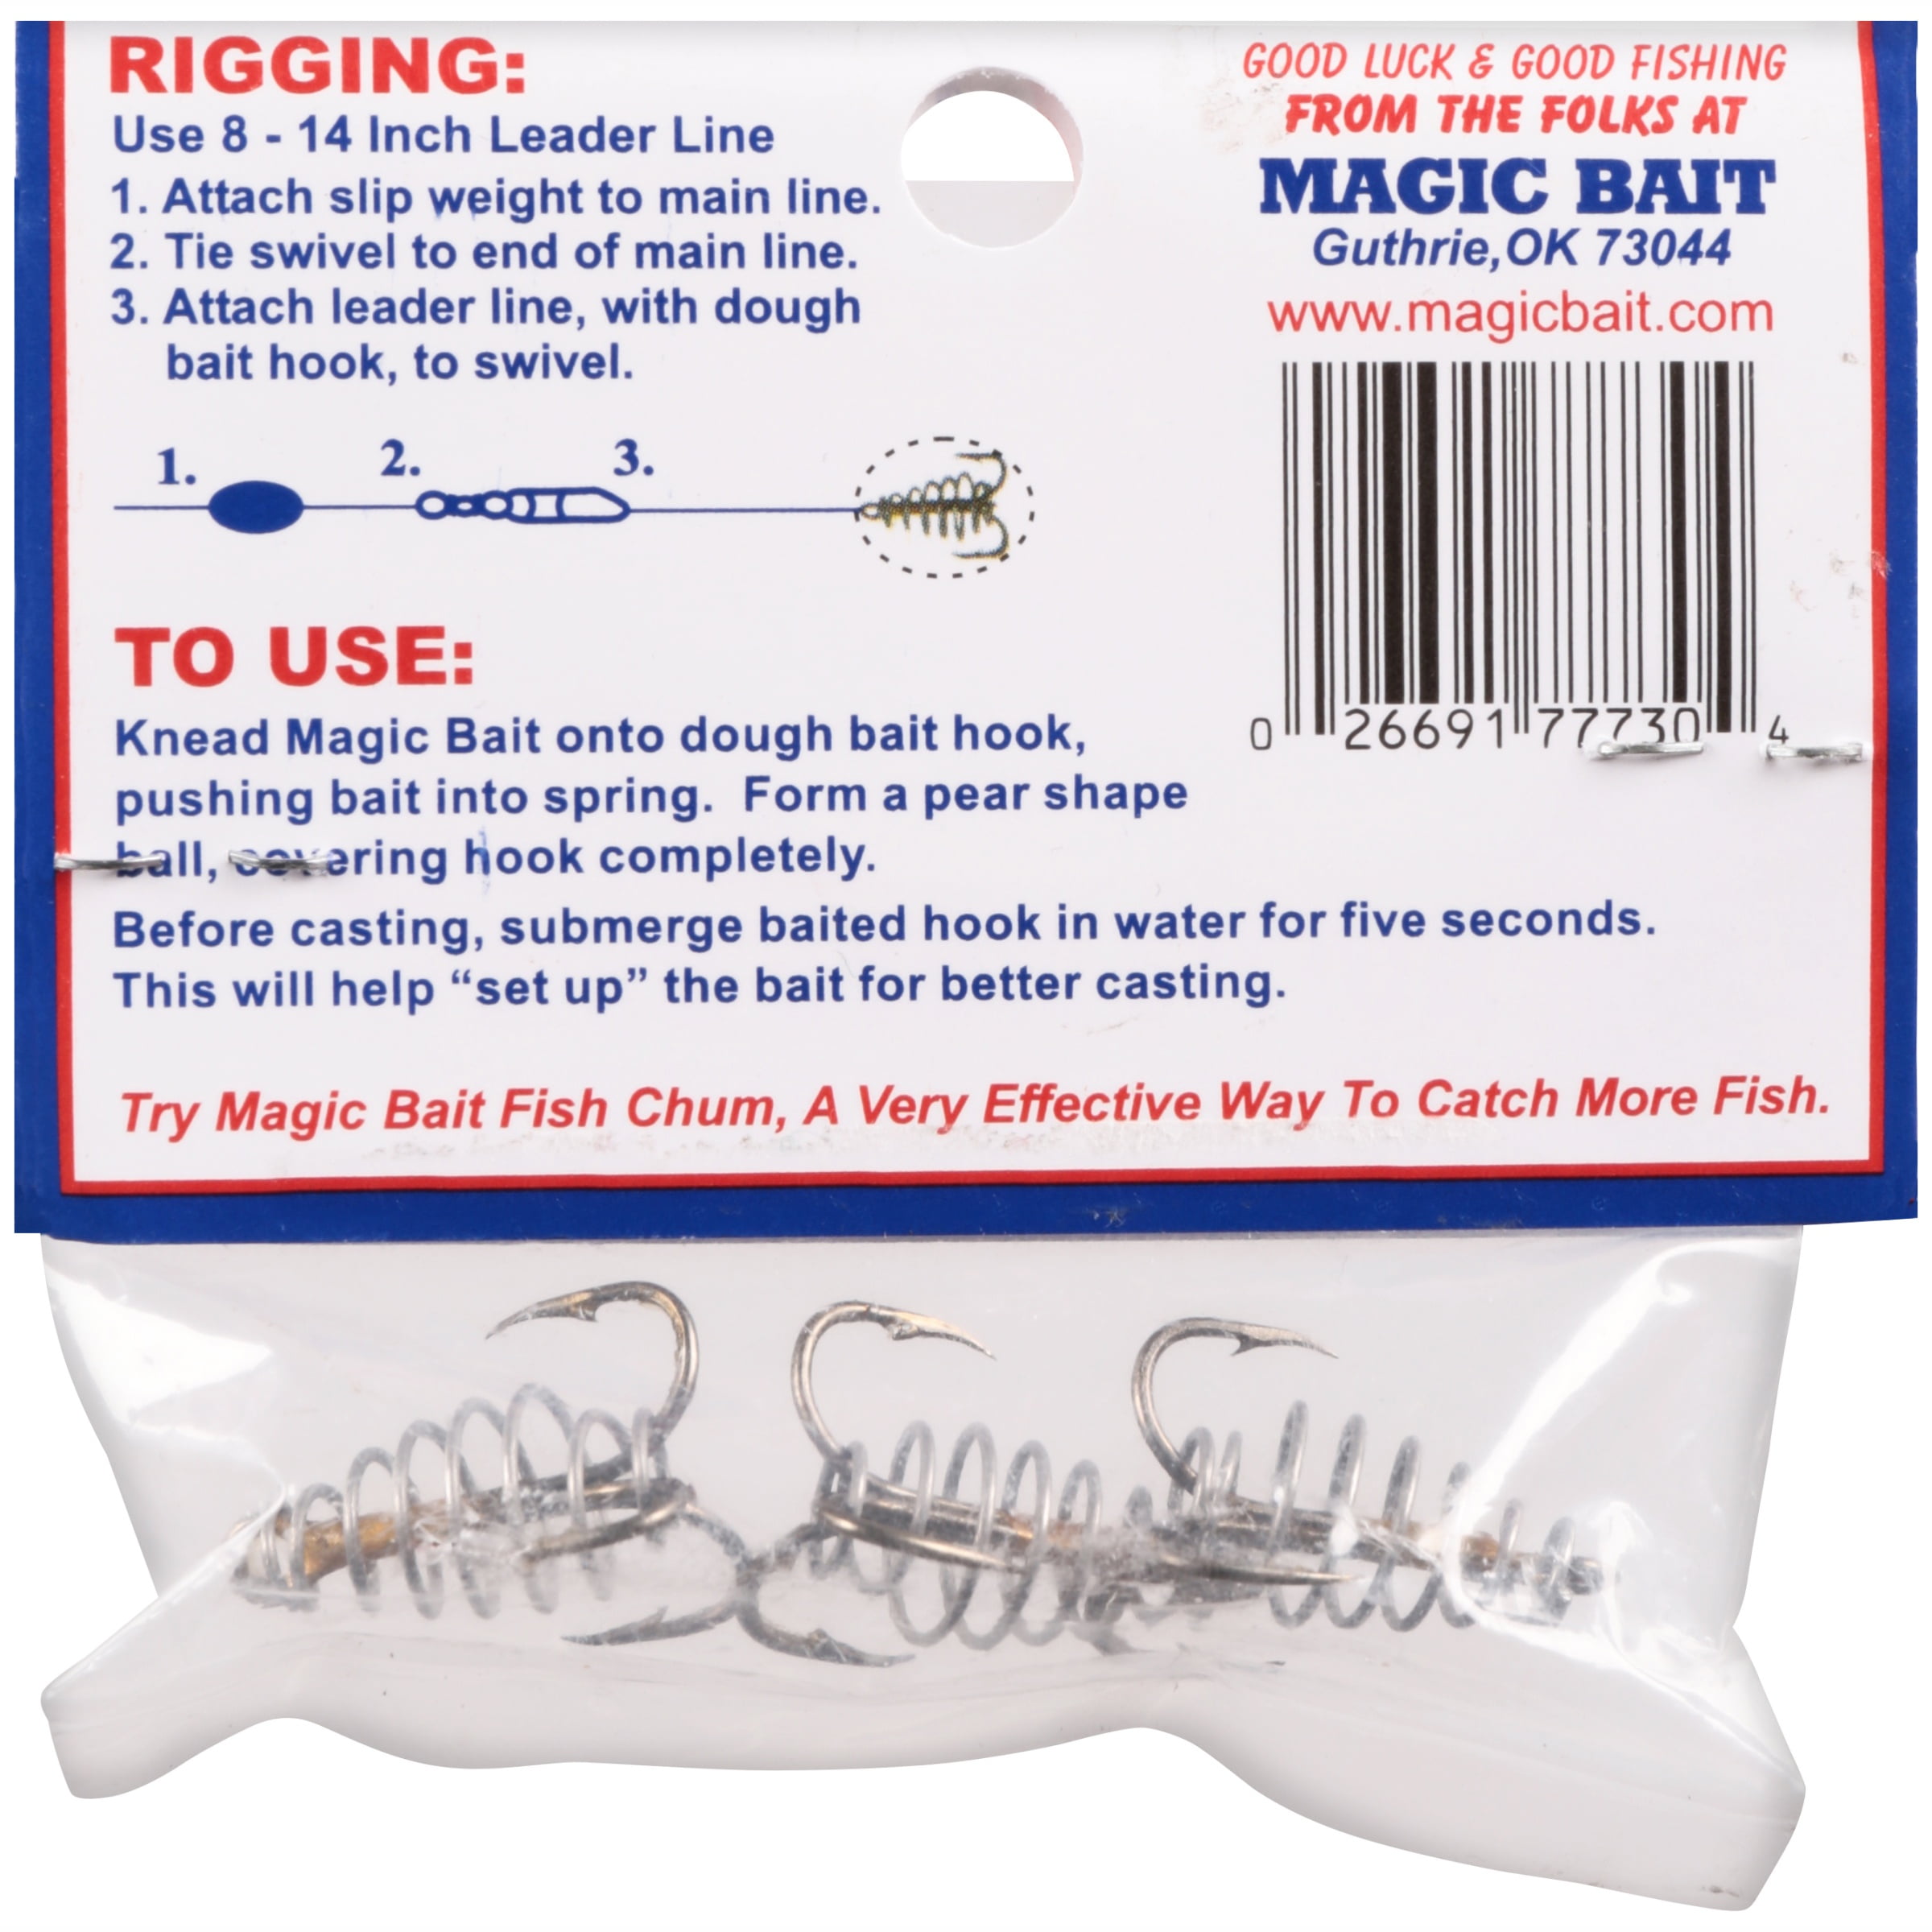 Bomgaars : South Bend Do-Bait Treble Hook, Size 4, 3-Pack : Hooks